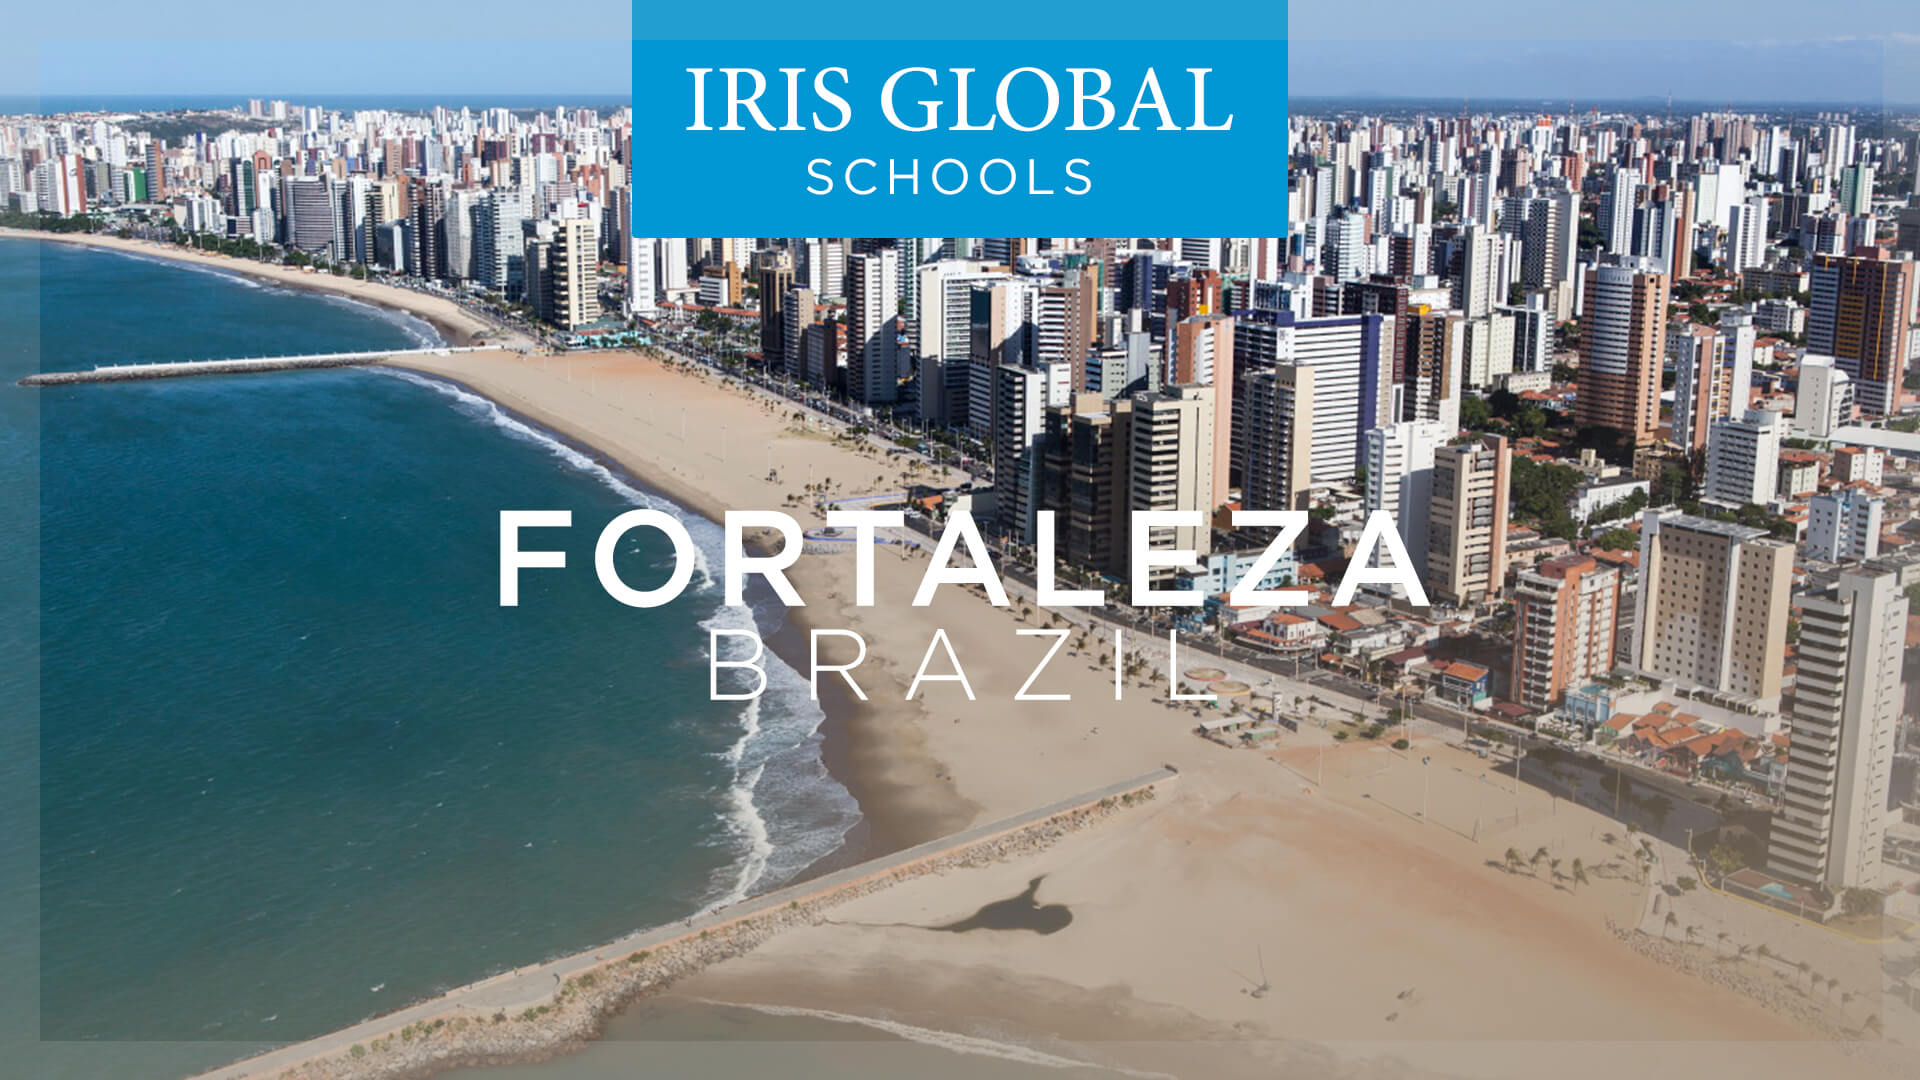 Iris Global School Fortaleza, Brazil